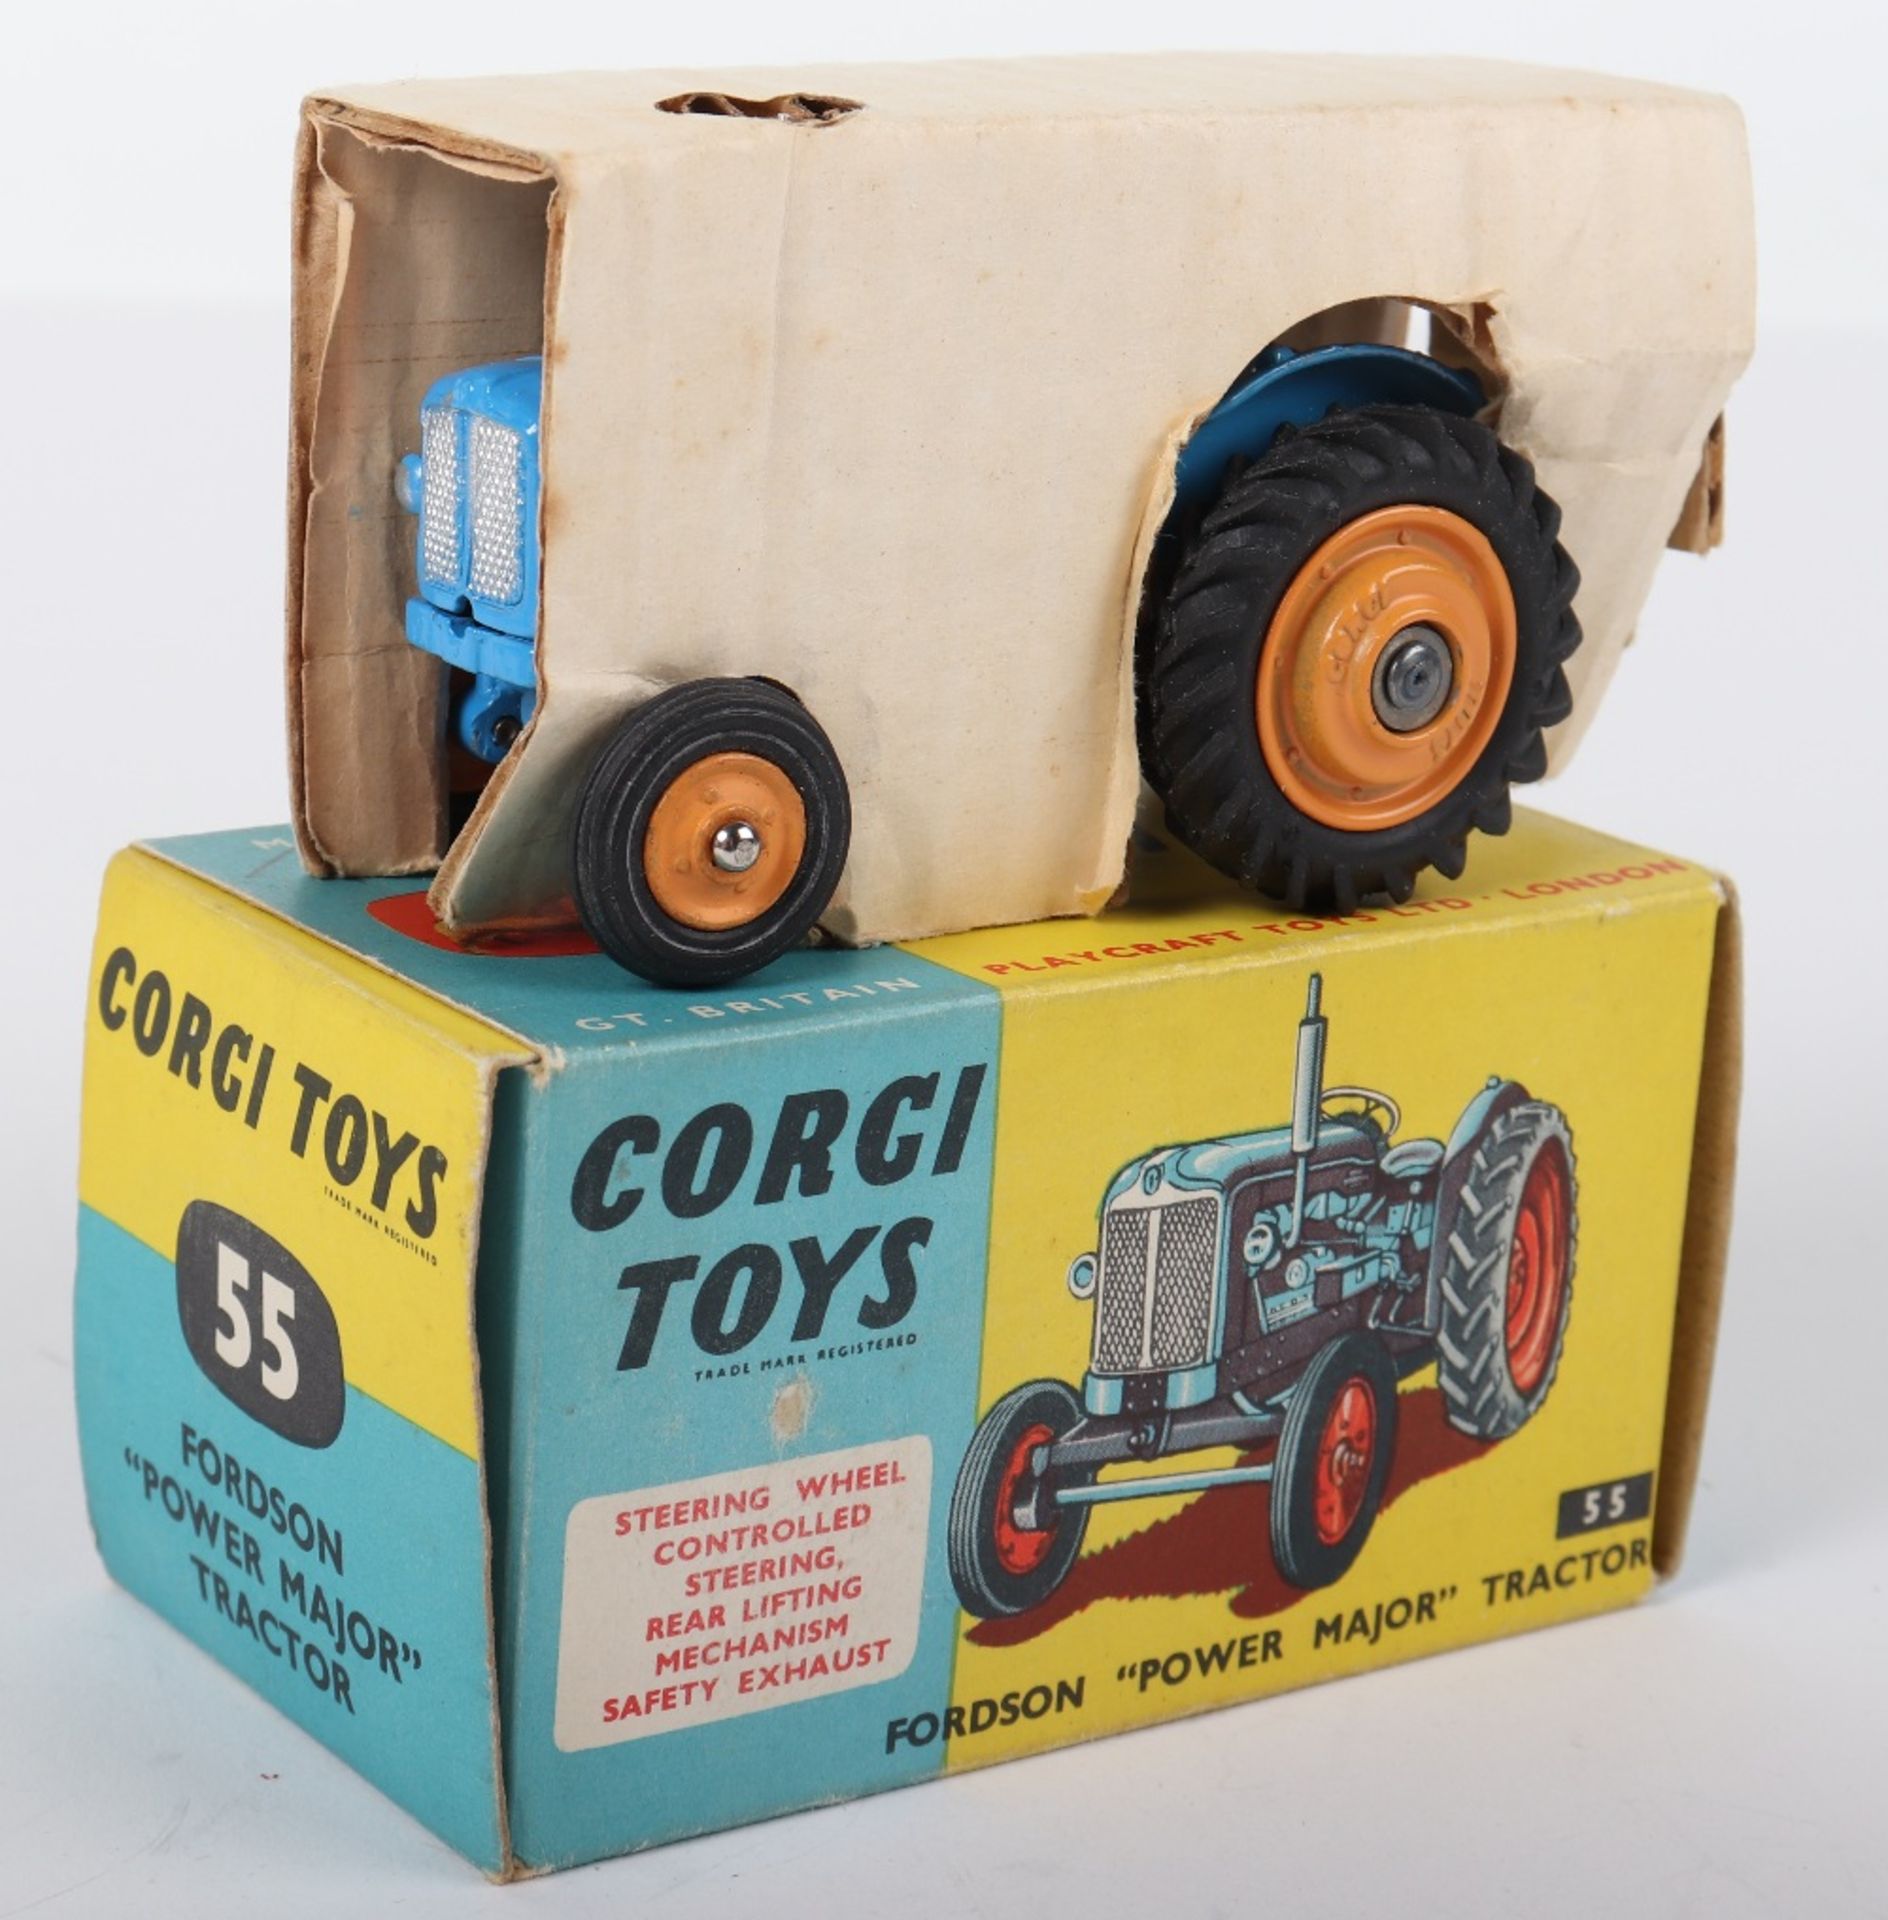 Boxed Corgi Toys 55 Fordson “Power Major” Tractor